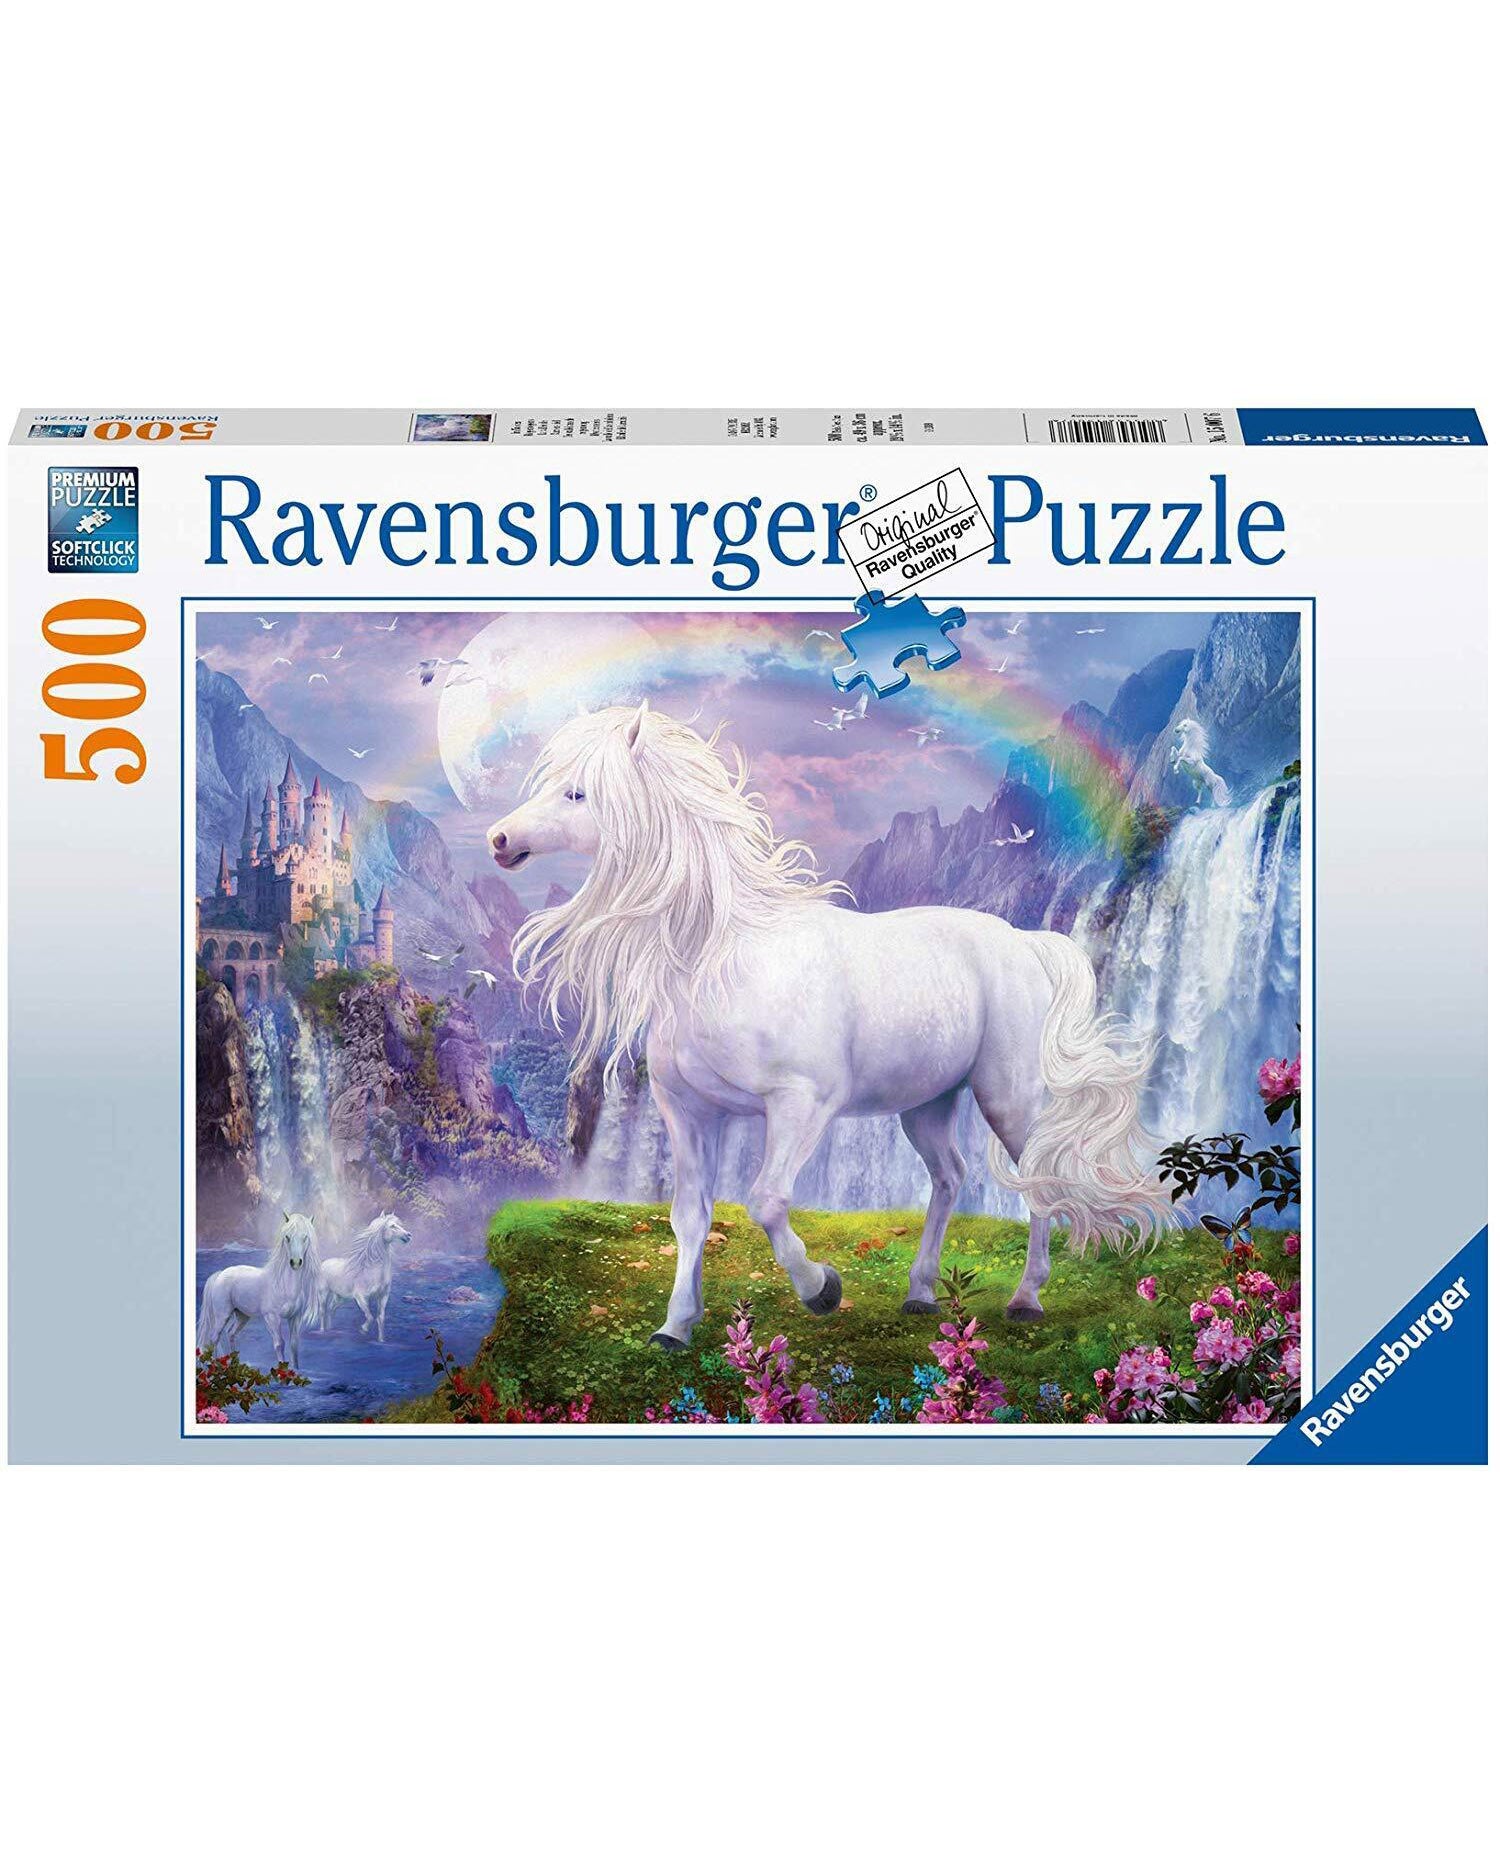 Ravensburger Puzzle - Mystic Steed 500pc